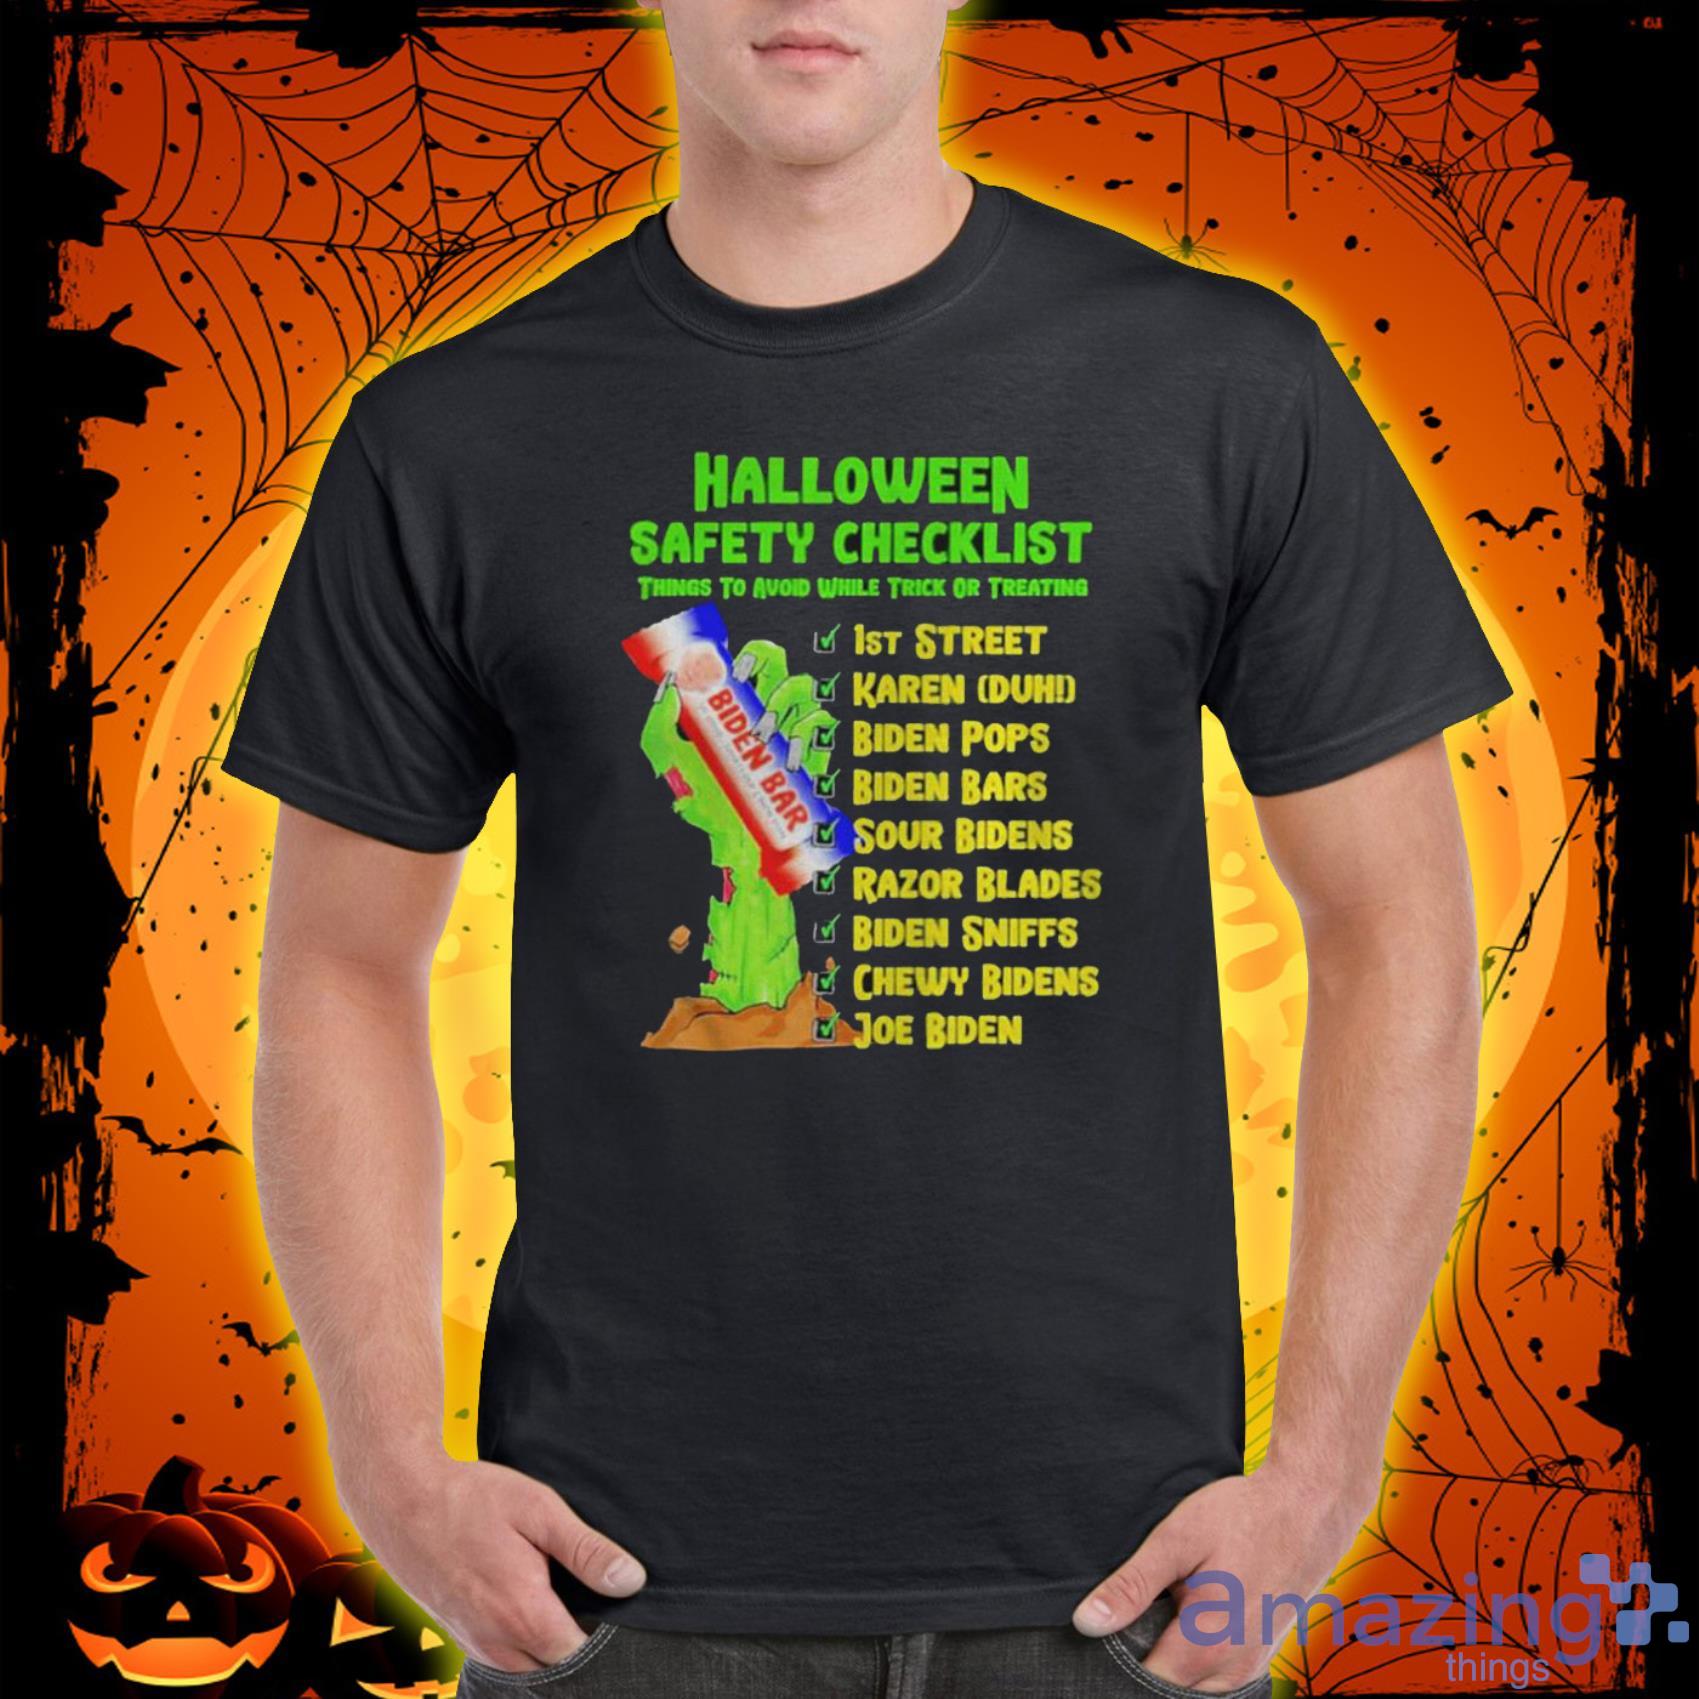 Halloween Safety Checklist Joe Biden Meme Trending T-Shirt 2022 Product Photo 1